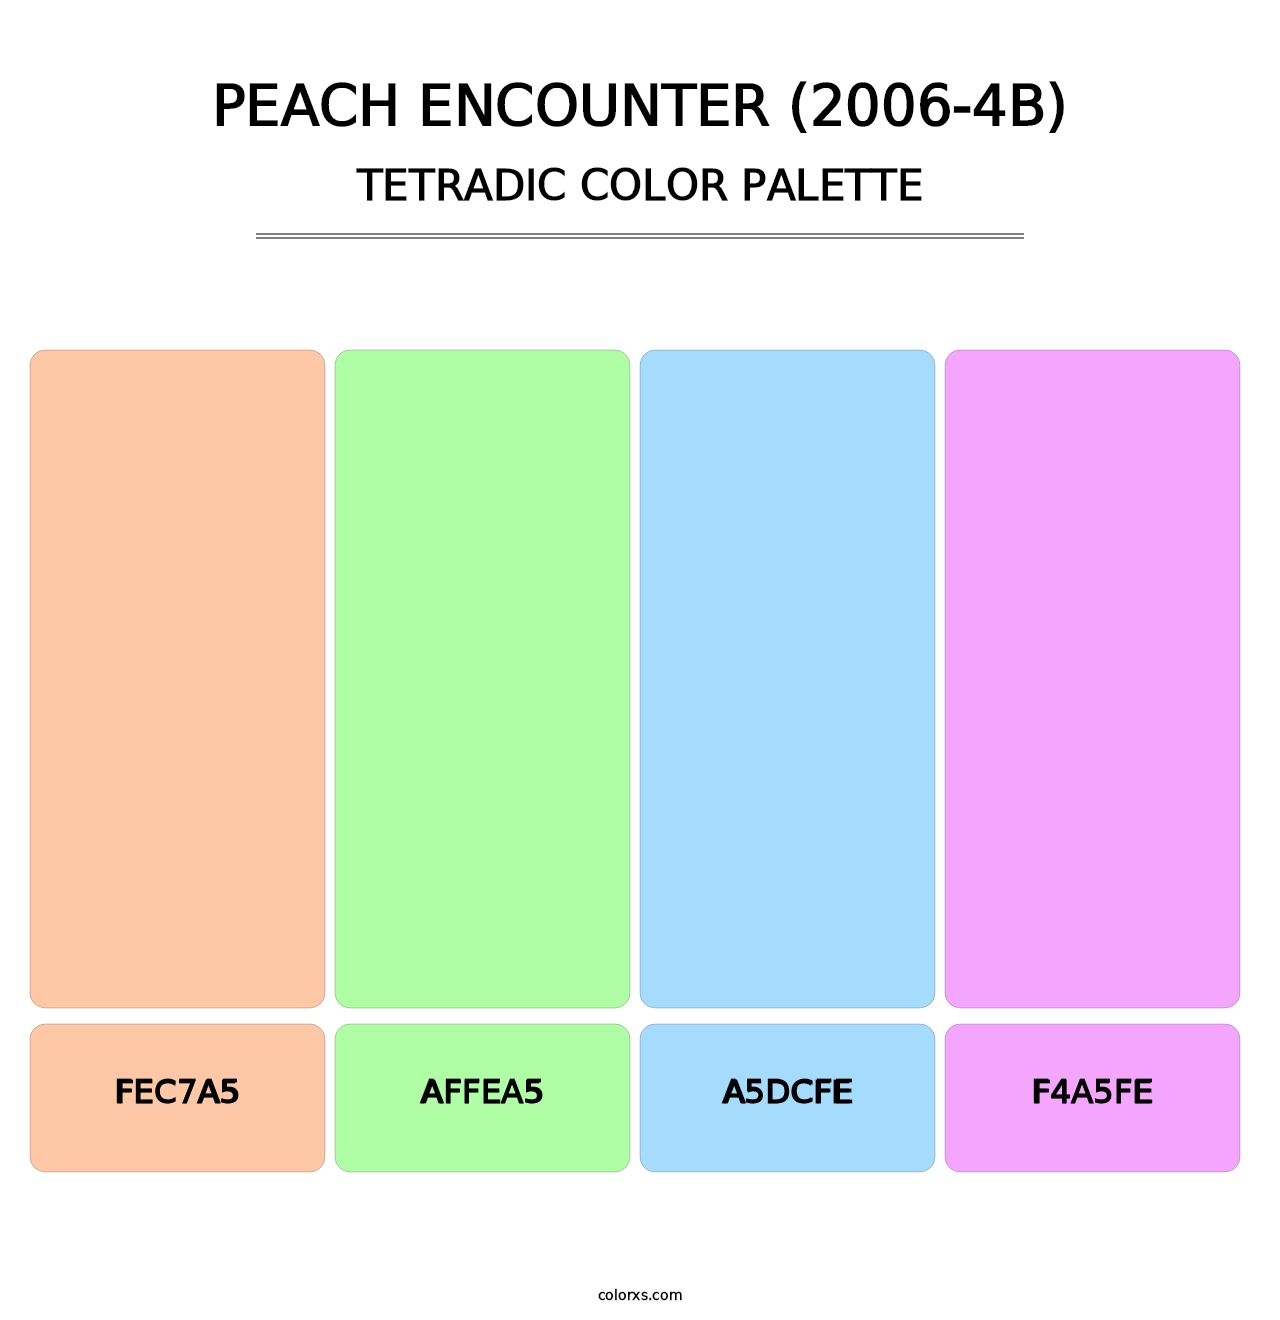 Peach Encounter (2006-4B) - Tetradic Color Palette